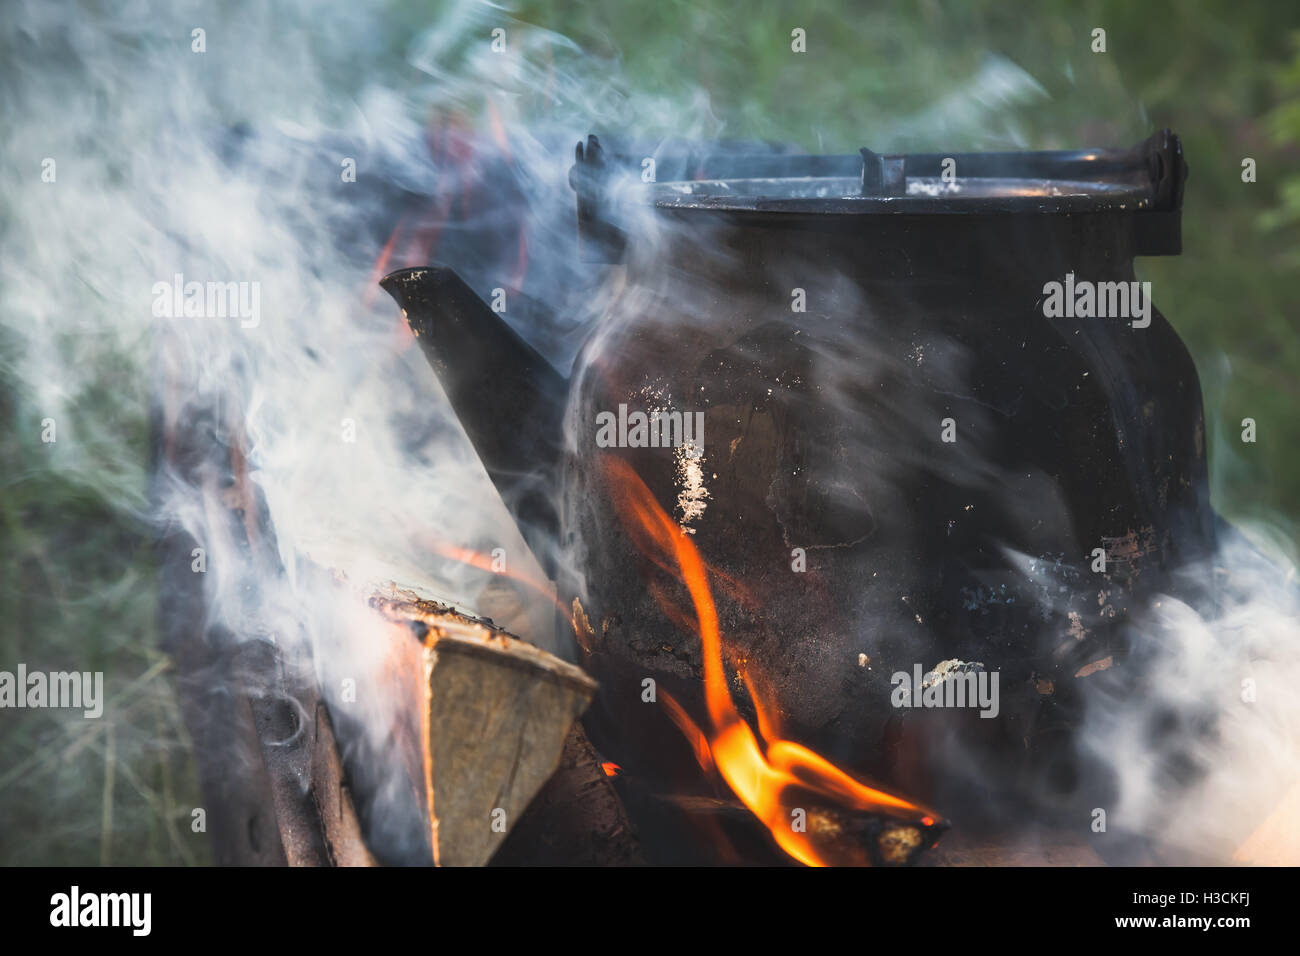 https://c8.alamy.com/comp/H3CKFJ/old-black-teapot-with-boiling-water-stands-on-a-bonfire-H3CKFJ.jpg